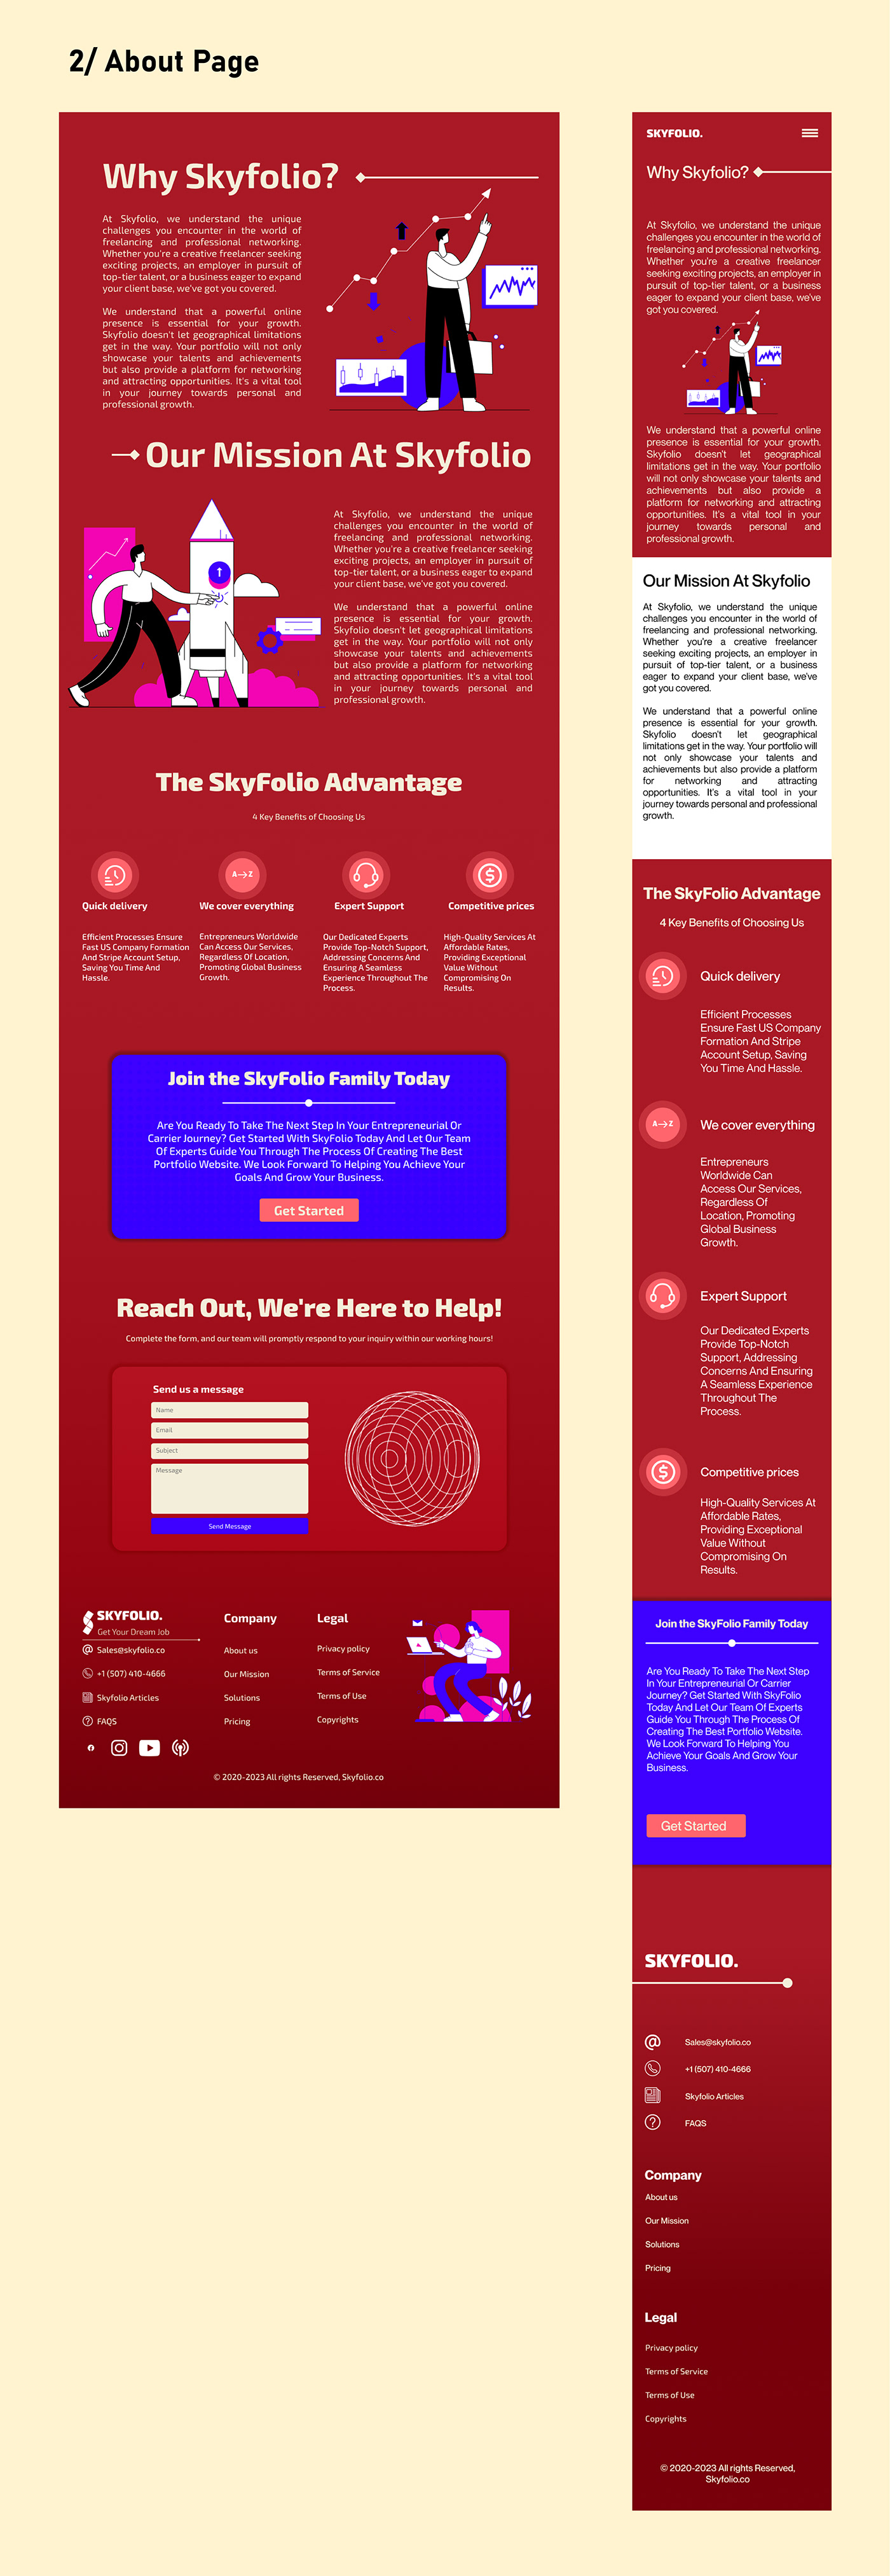 Vibrant red digital agency template showcasing modern, innovative web design. Sleek layout 